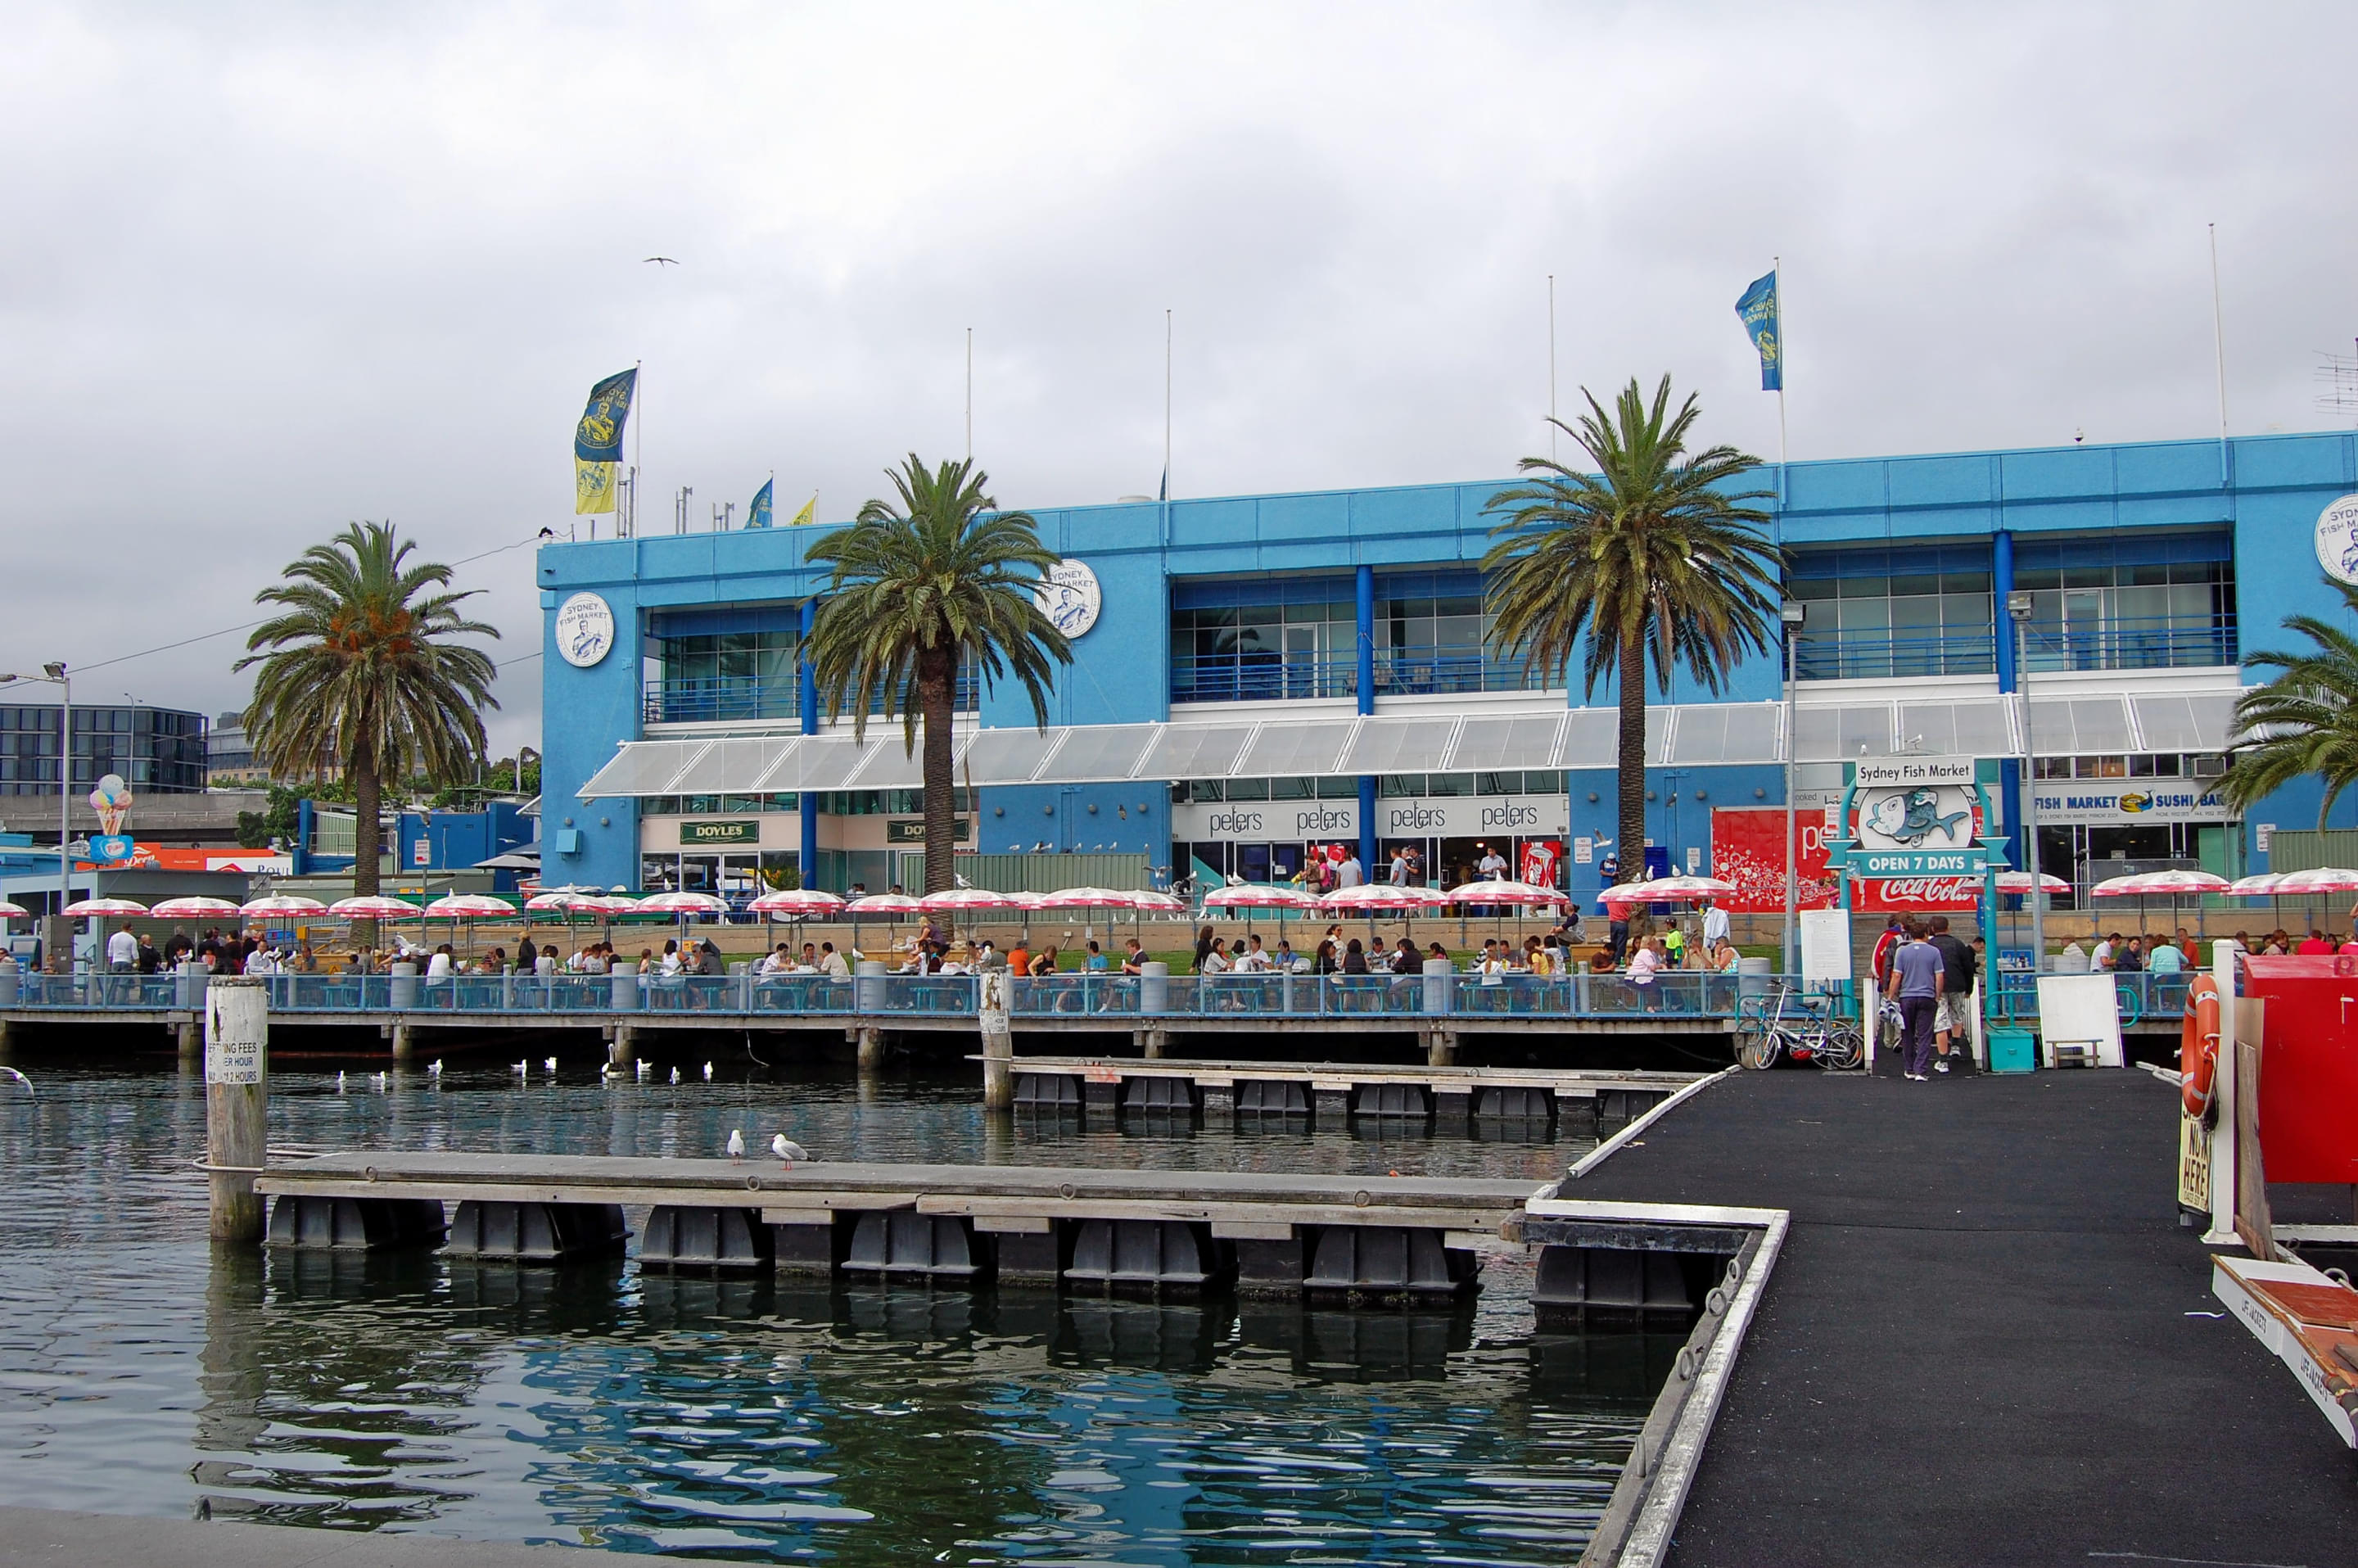 Sydney Fish Market Overview